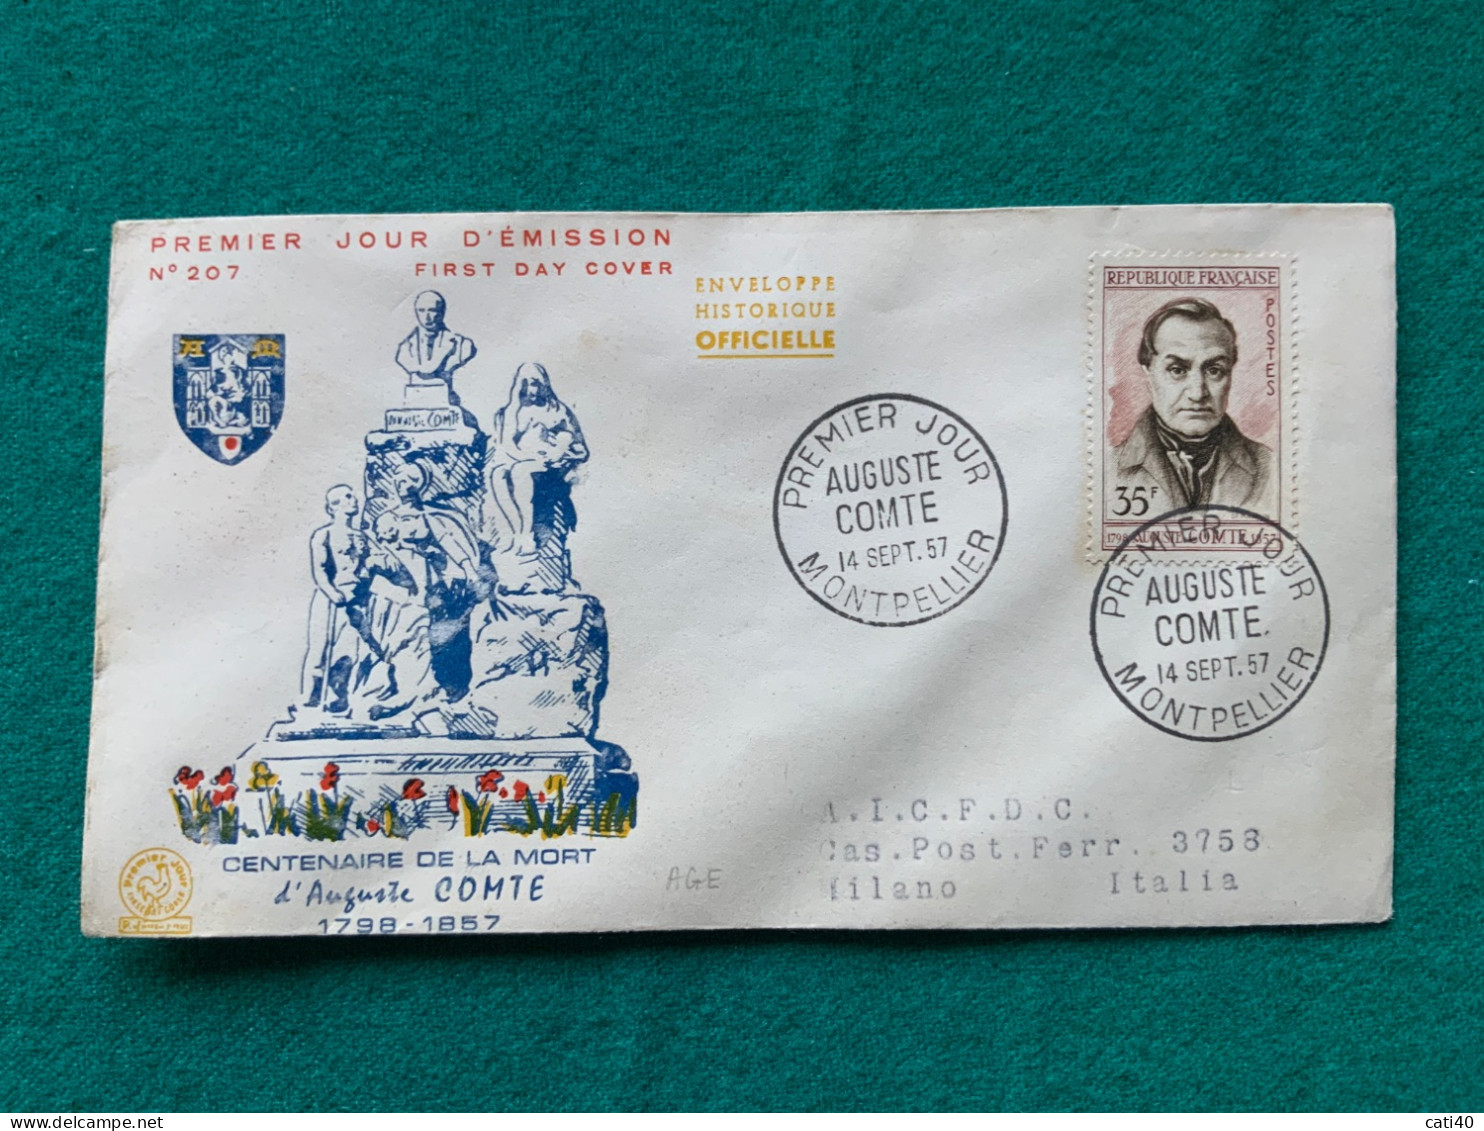 FRANCIA - CENTENAIRE DE LA MORT D'AUGUSTE CONTE  - FDC 1957 - Storia Postale